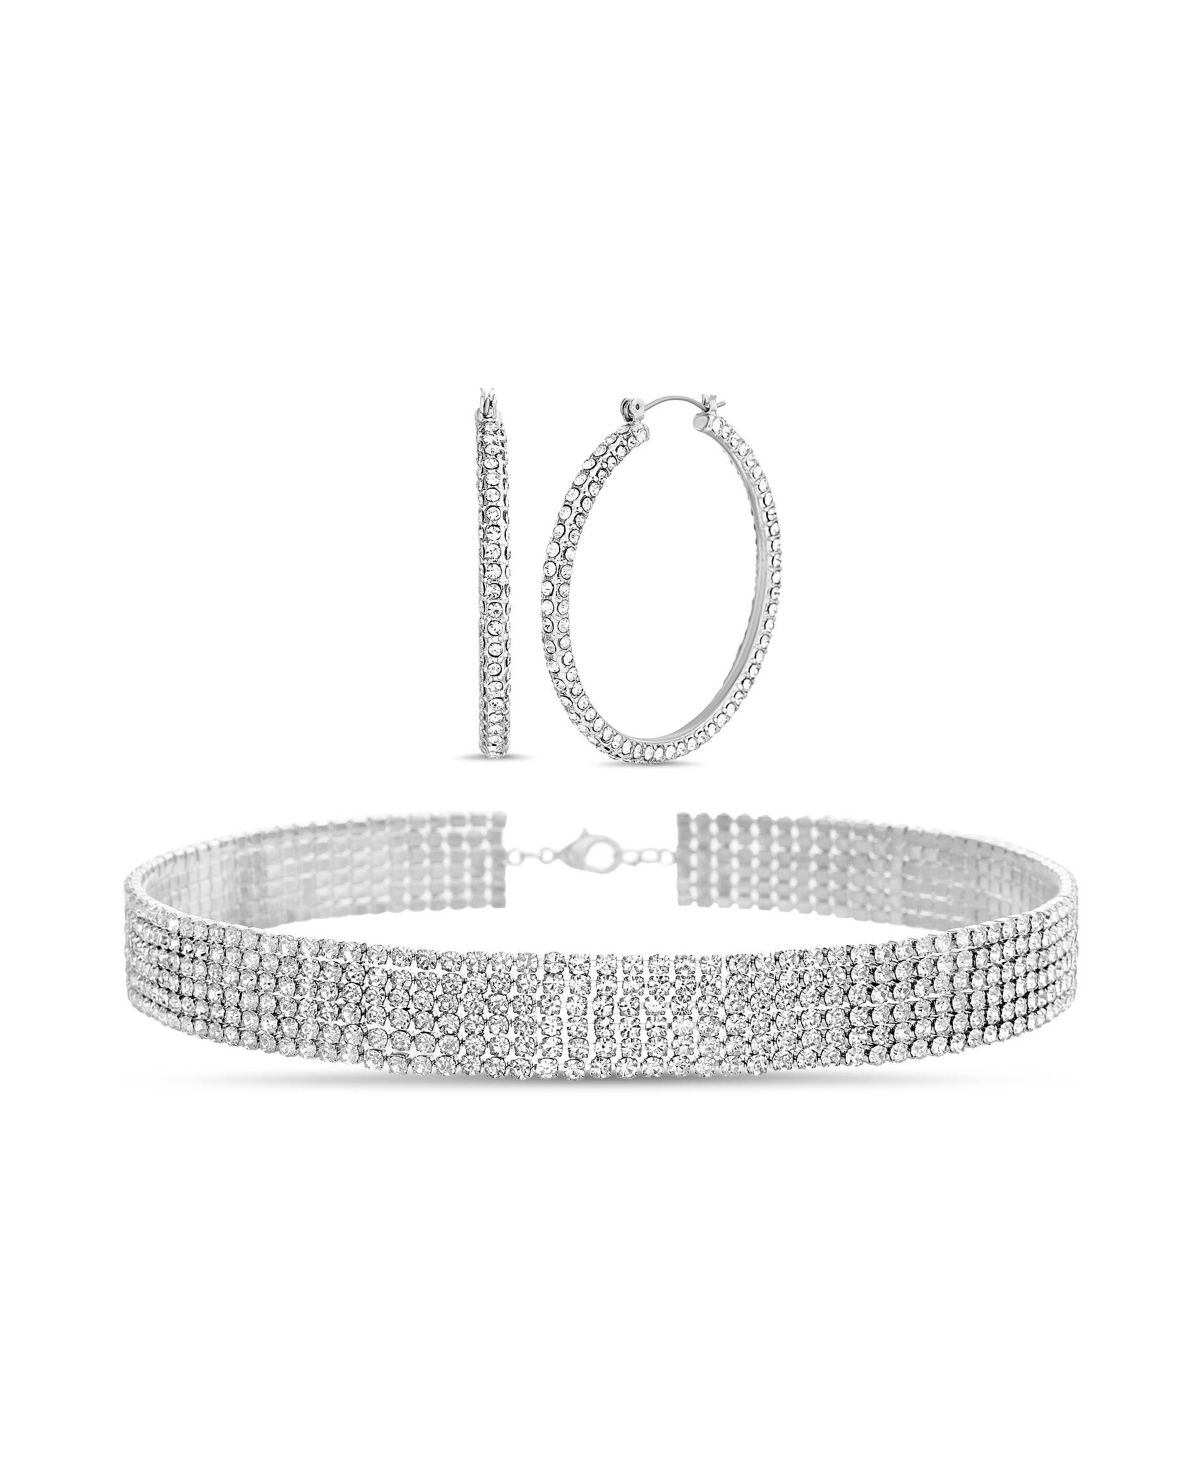 Boxed Rhinestone Hoop Earrings with Rhinestone Choker Necklace Set, 2 Piece - Crystal